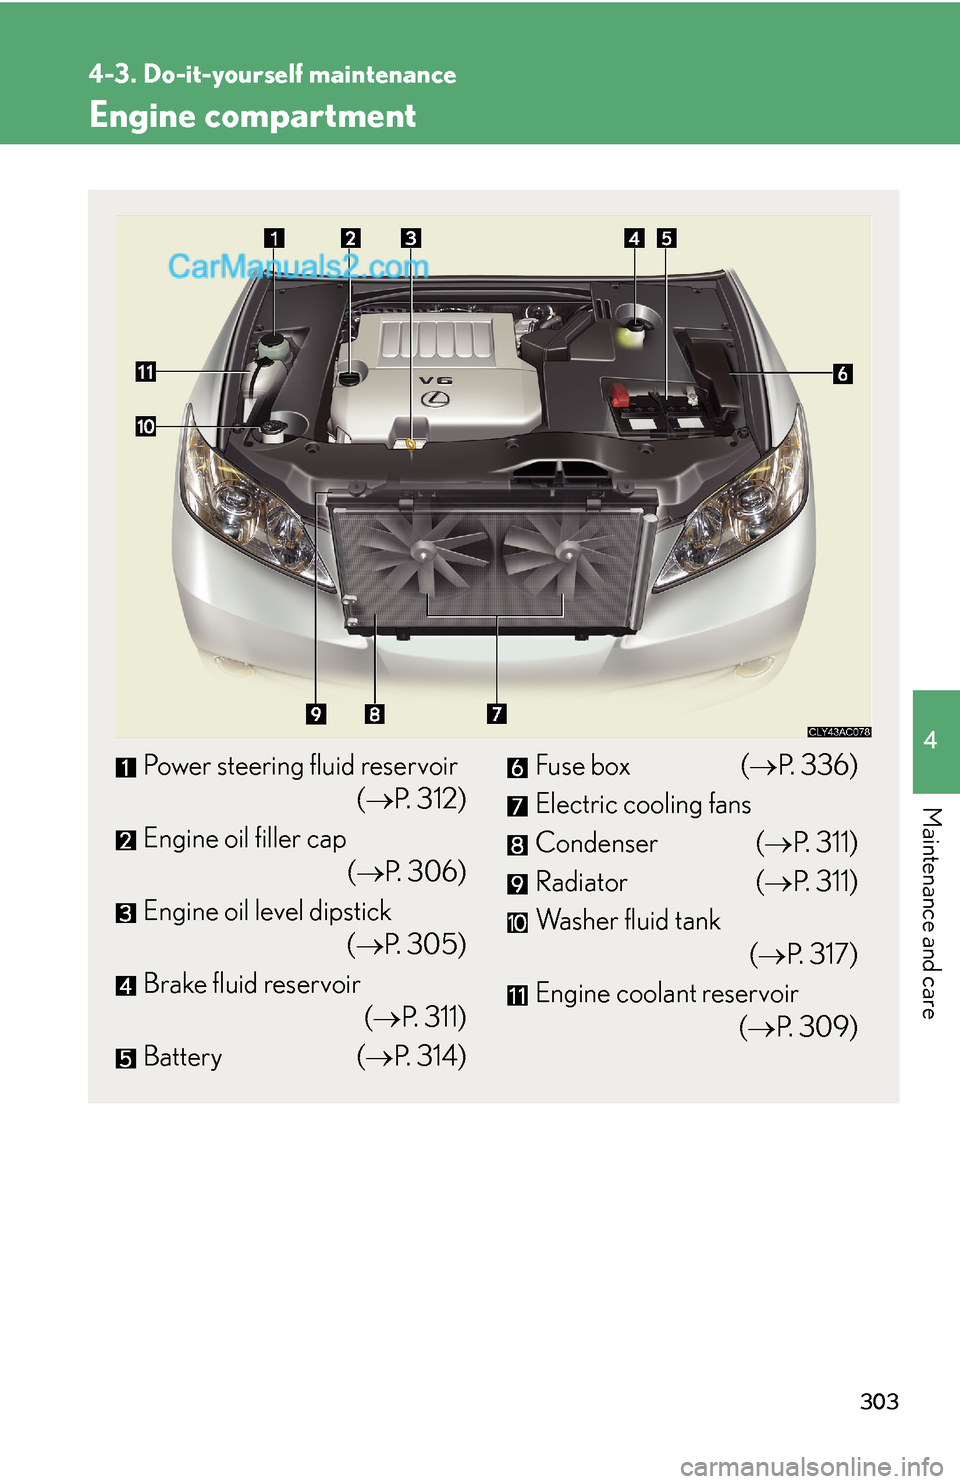 Lexus ES350 2008  Do-it-yourself maintenance 303
4-3. Do-it-yourself maintenance
4
Maintenance and care
Engine compartment
Power steering fluid reservoir
(→P. 312)
Engine oil filler cap
(→P. 306)
Engine oil level dipstick
(→P. 305)
Brake f